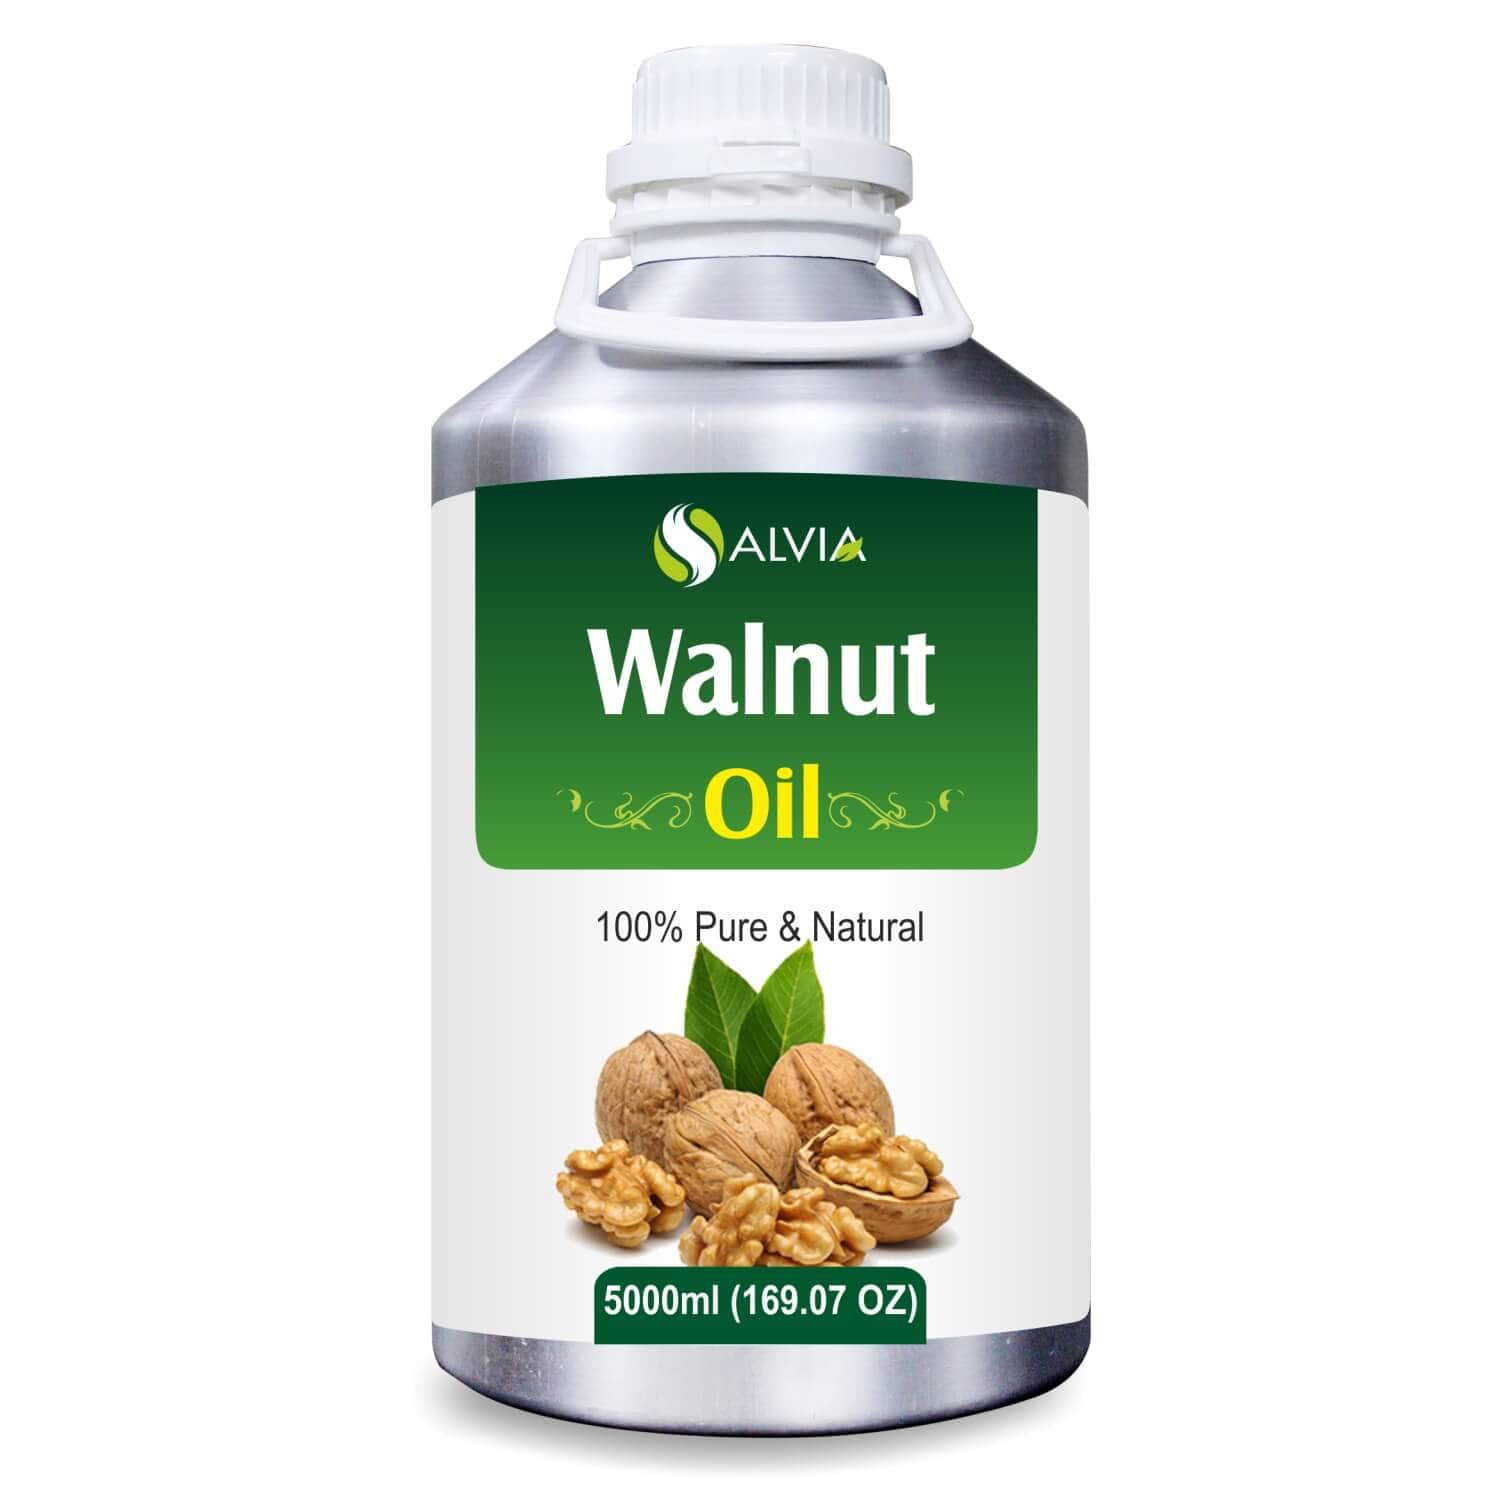 Salvia Natural Carrier Oils 5000ml Walnut Oil